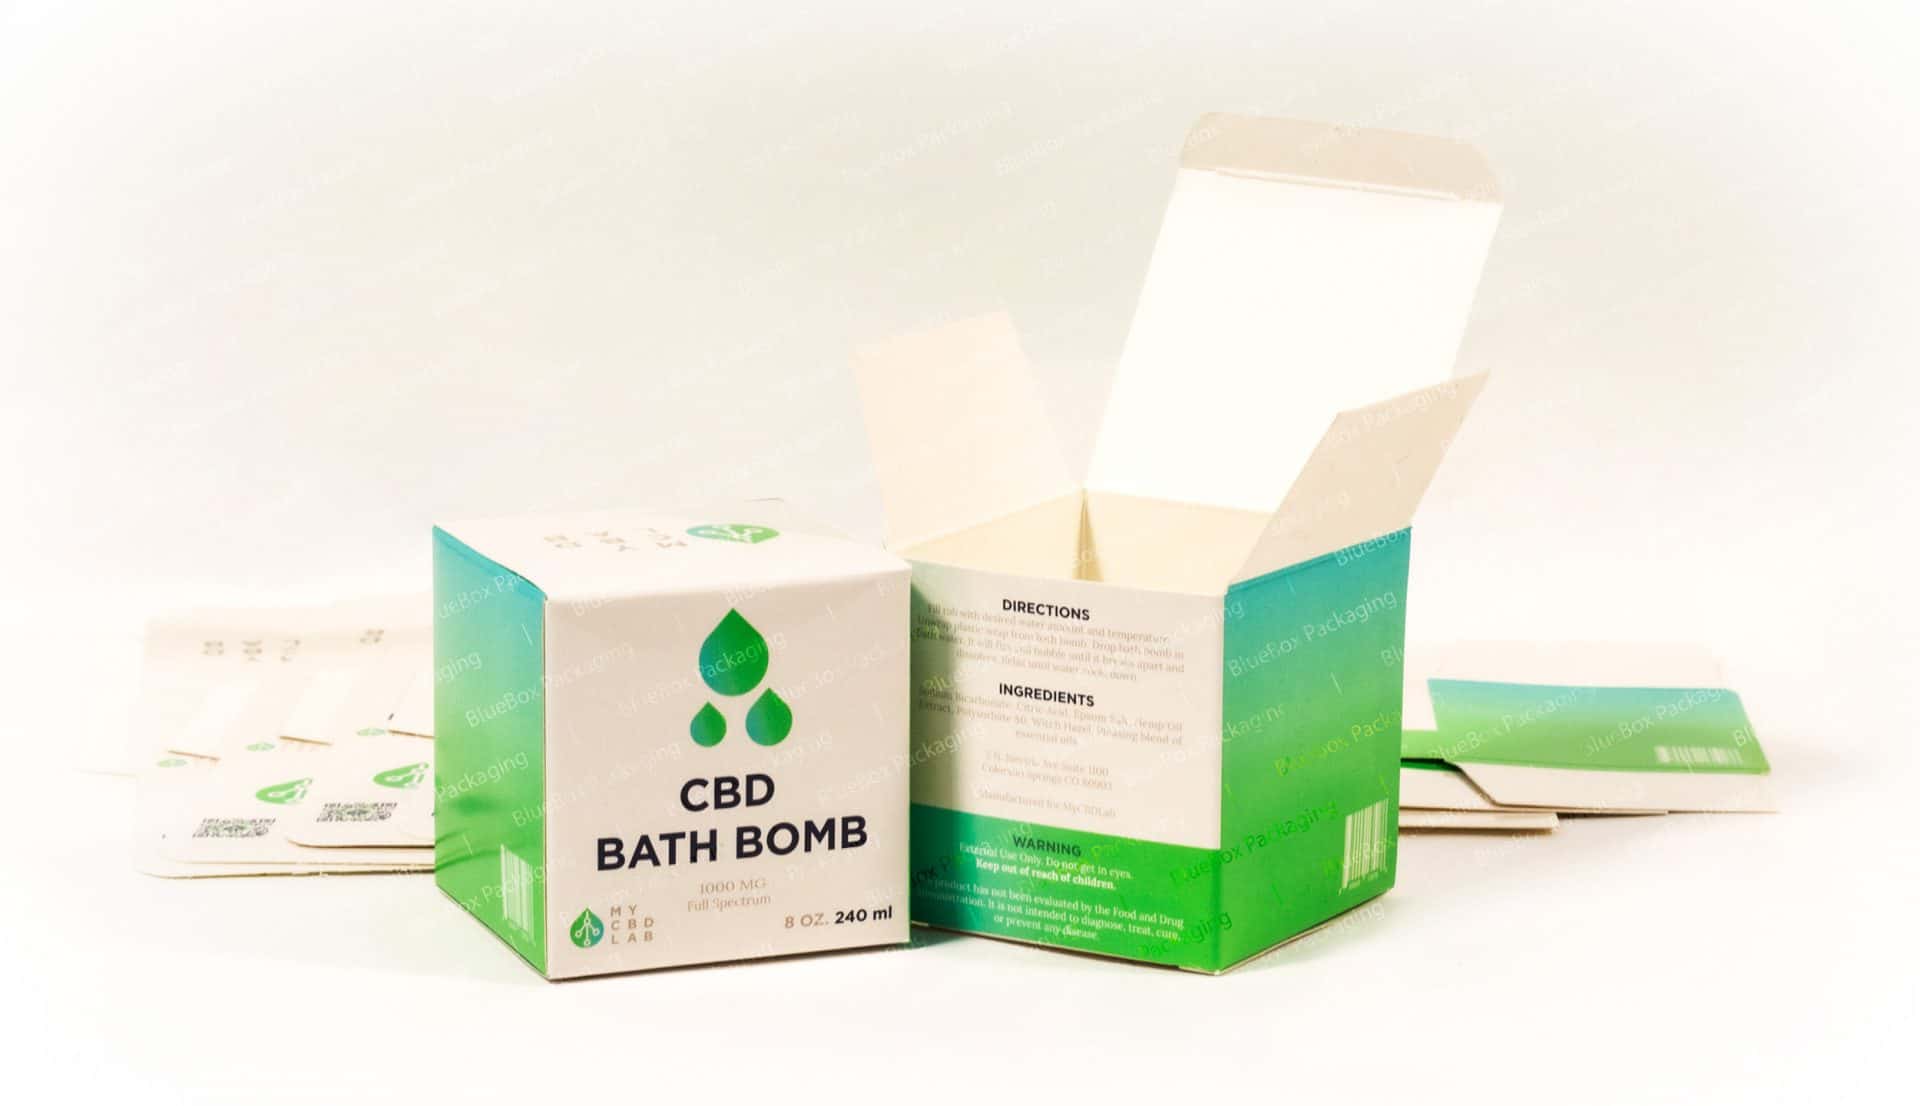 CBD bath bomb packaging boxes